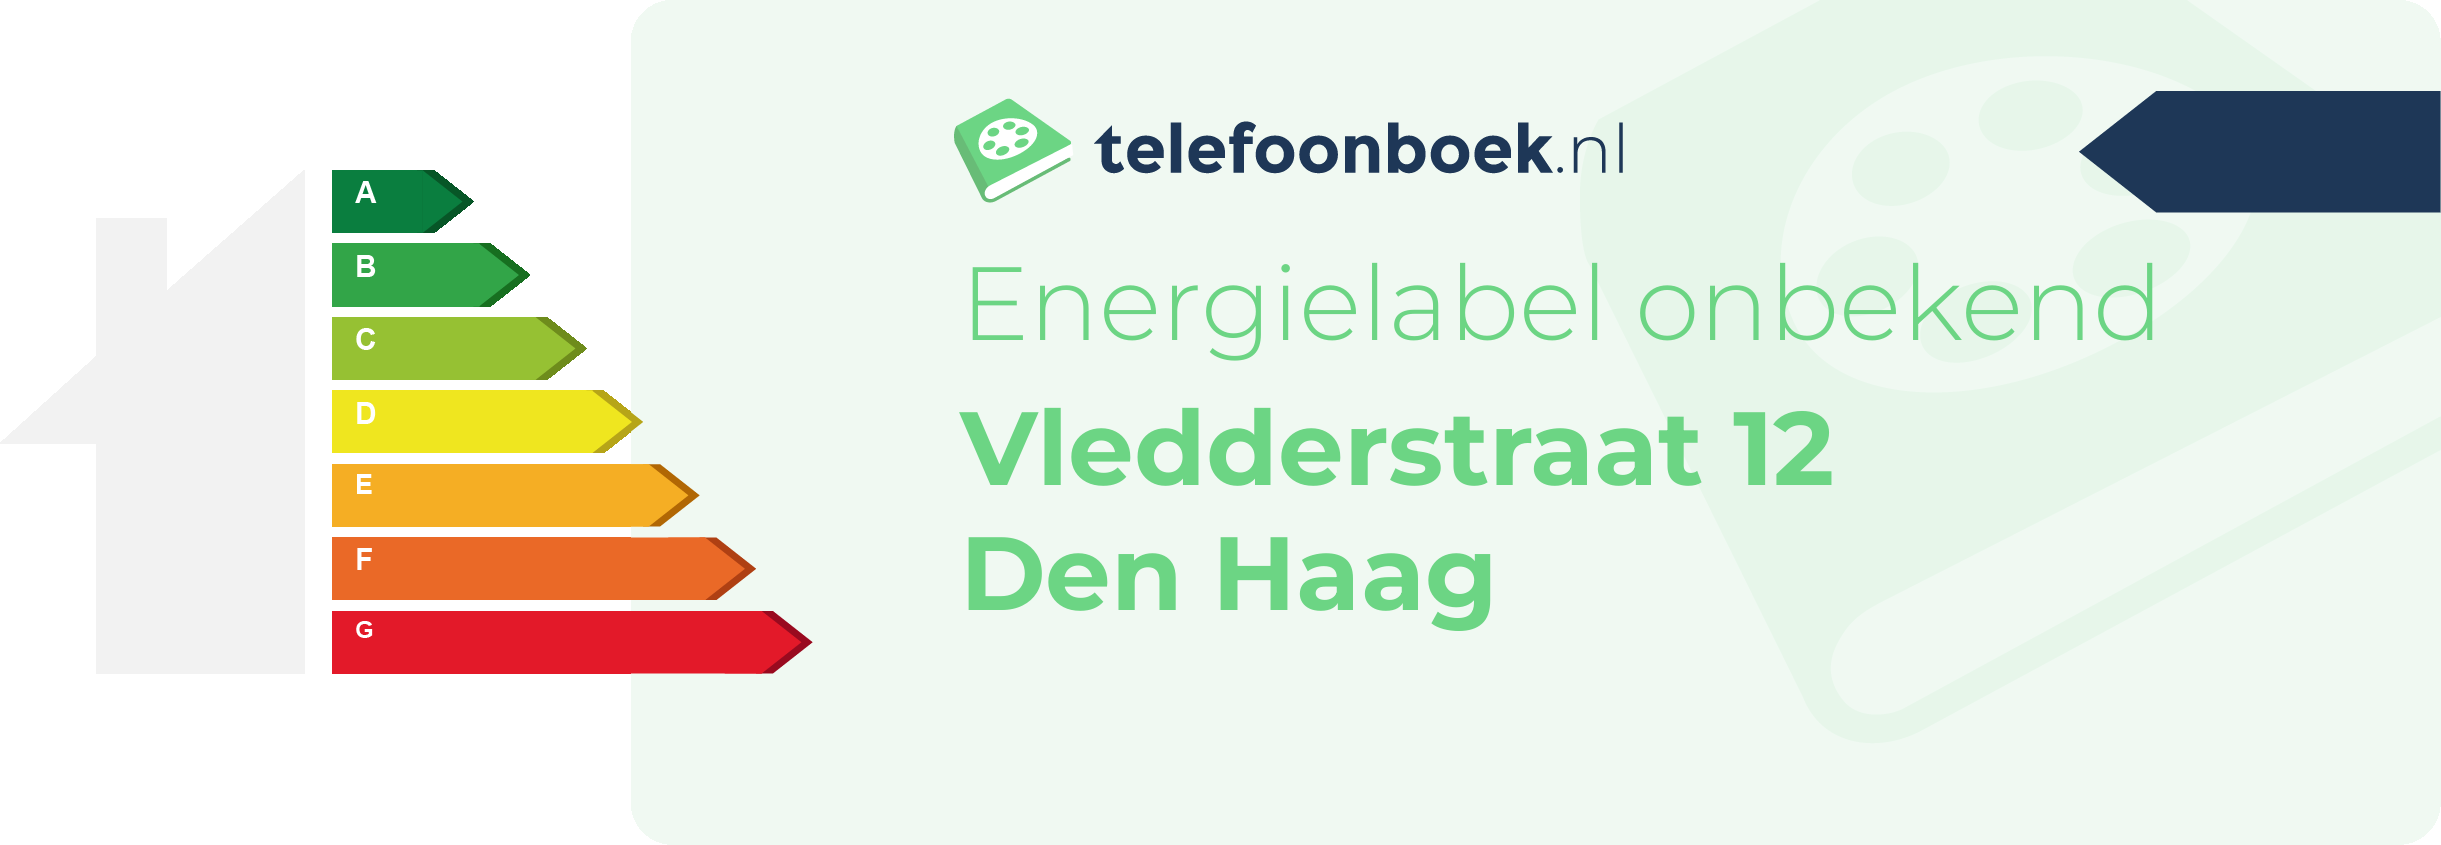 Energielabel Vledderstraat 12 Den Haag